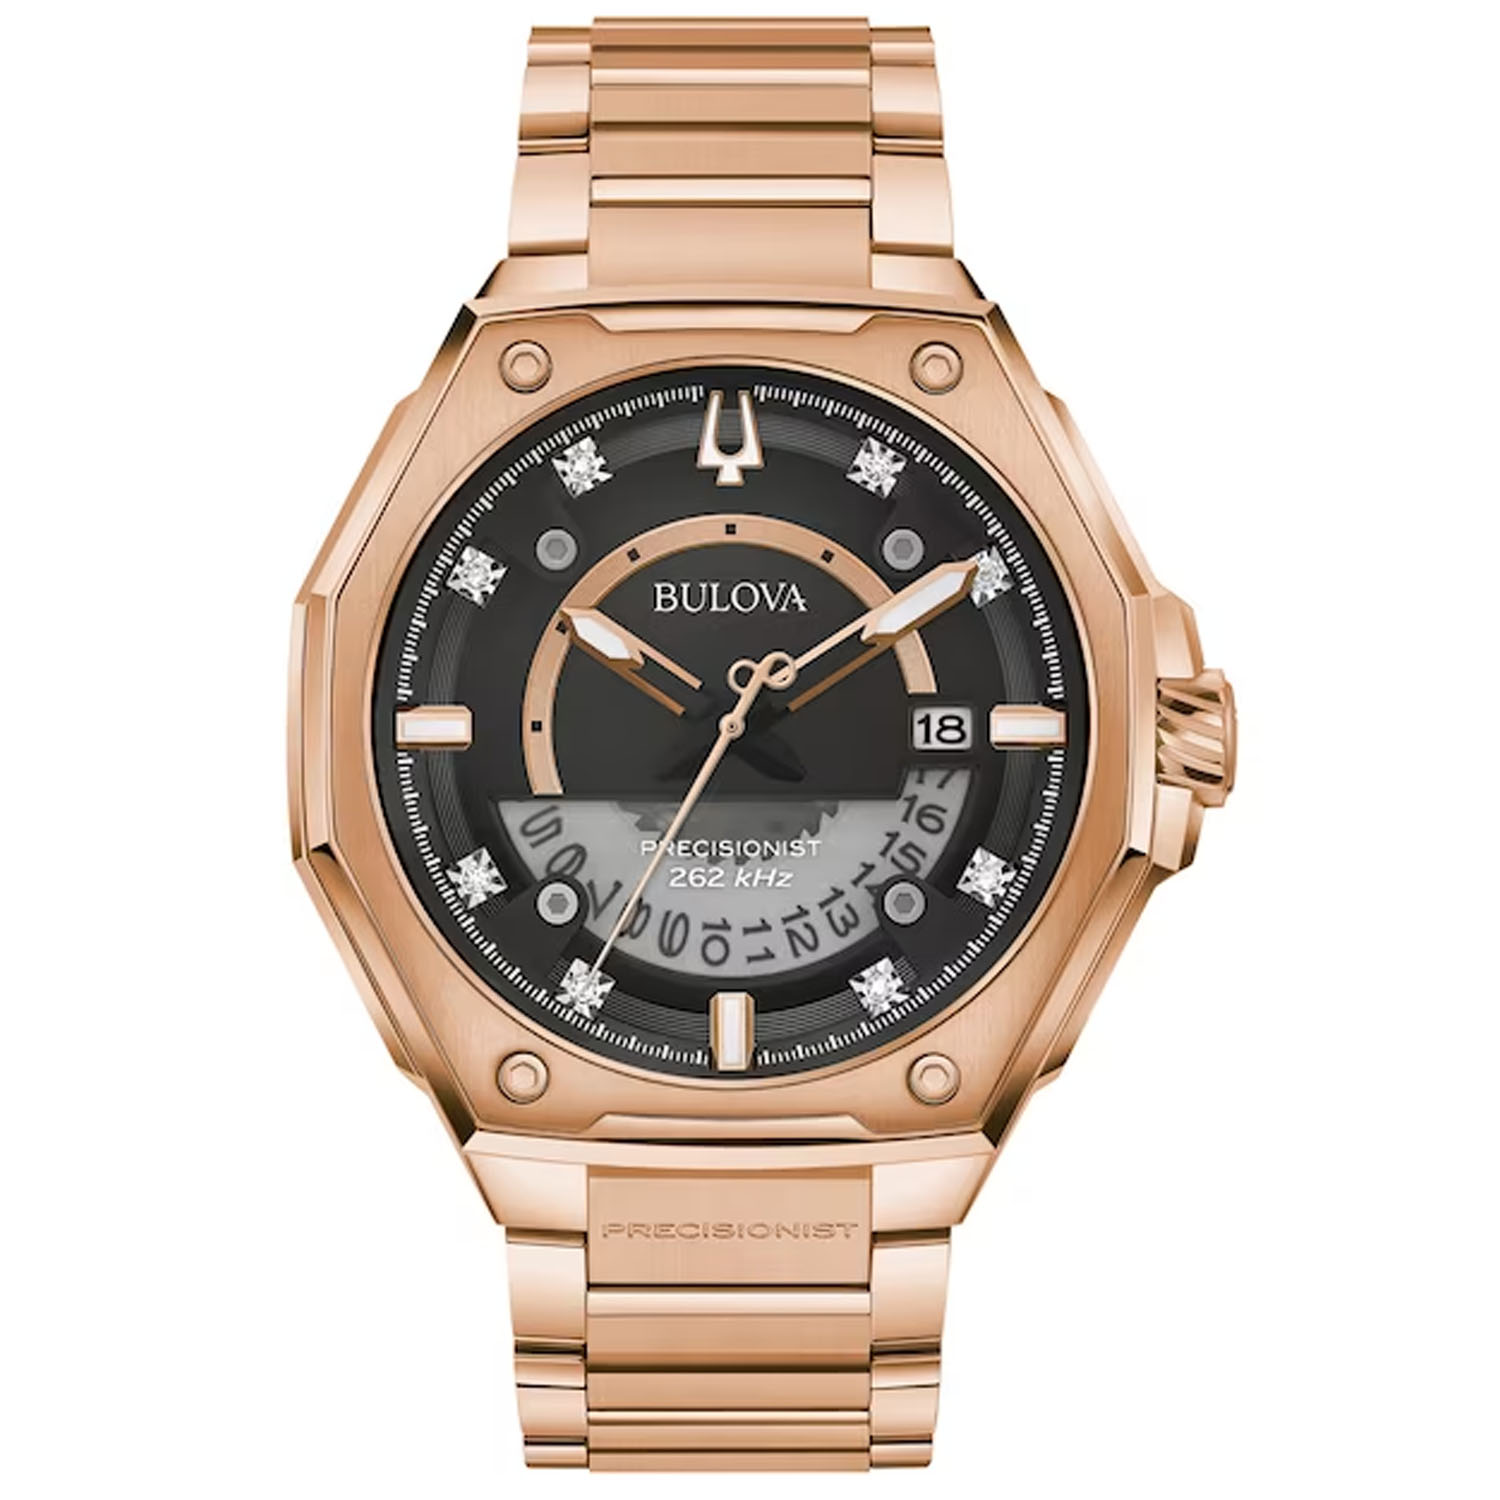 Bulova Men's Series X Black Dial Watch - 97D129